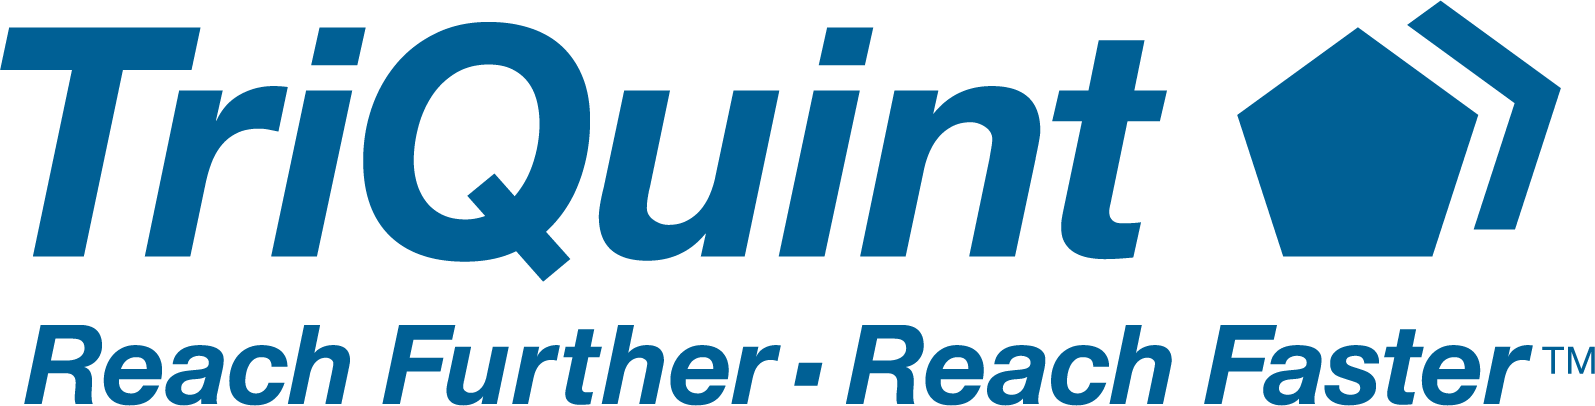 TriQuint logo